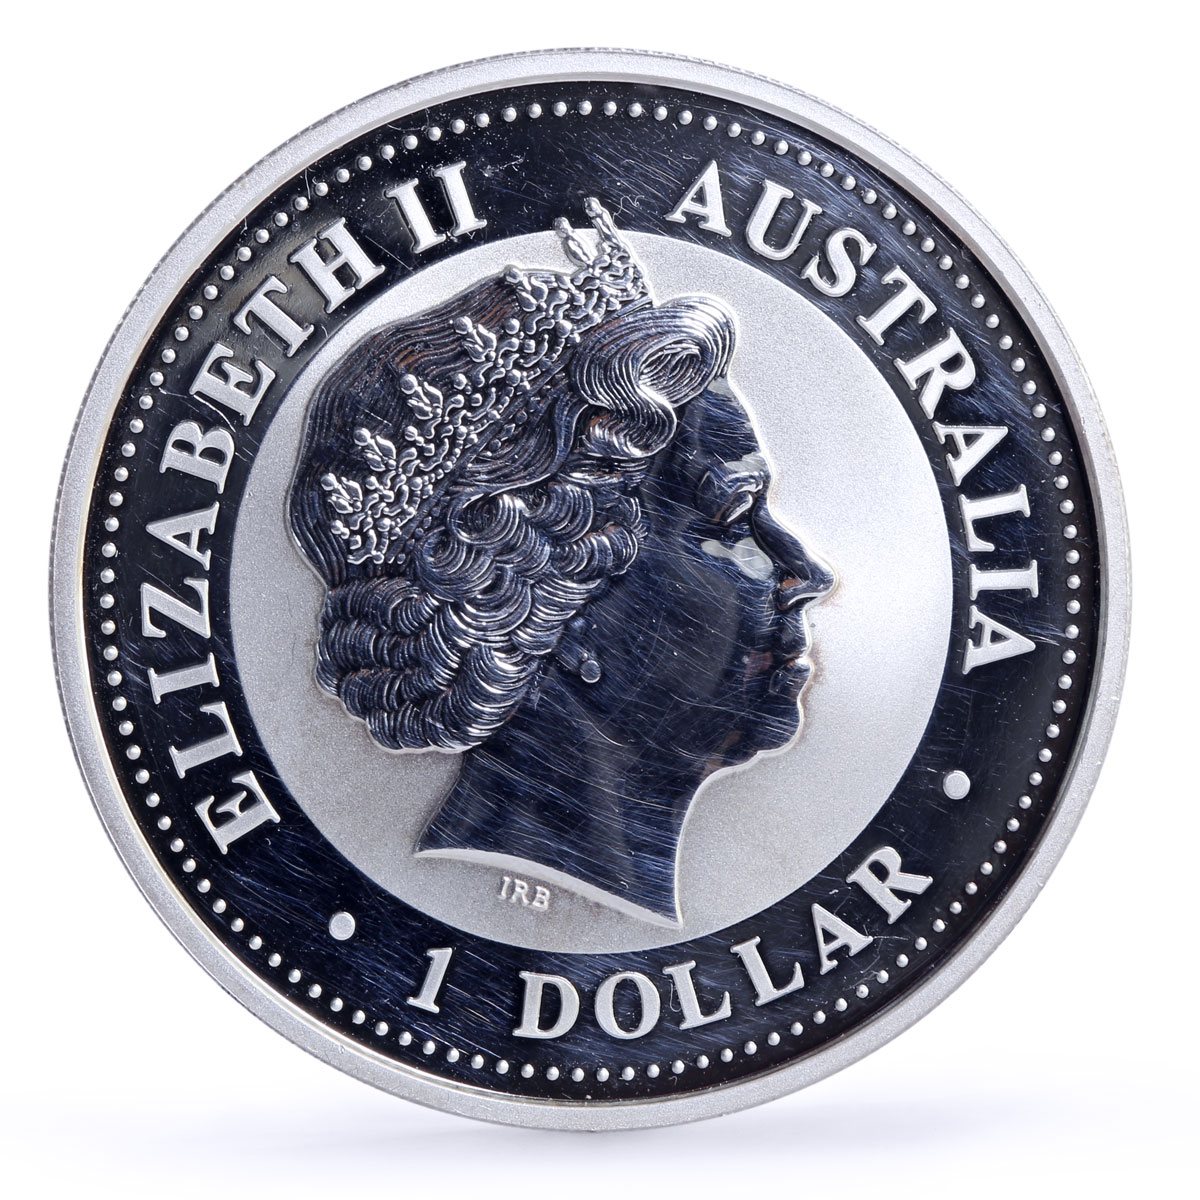 Australia 1 dollar Lunar Calendar I Year of the Monkey colored silver coin 2004